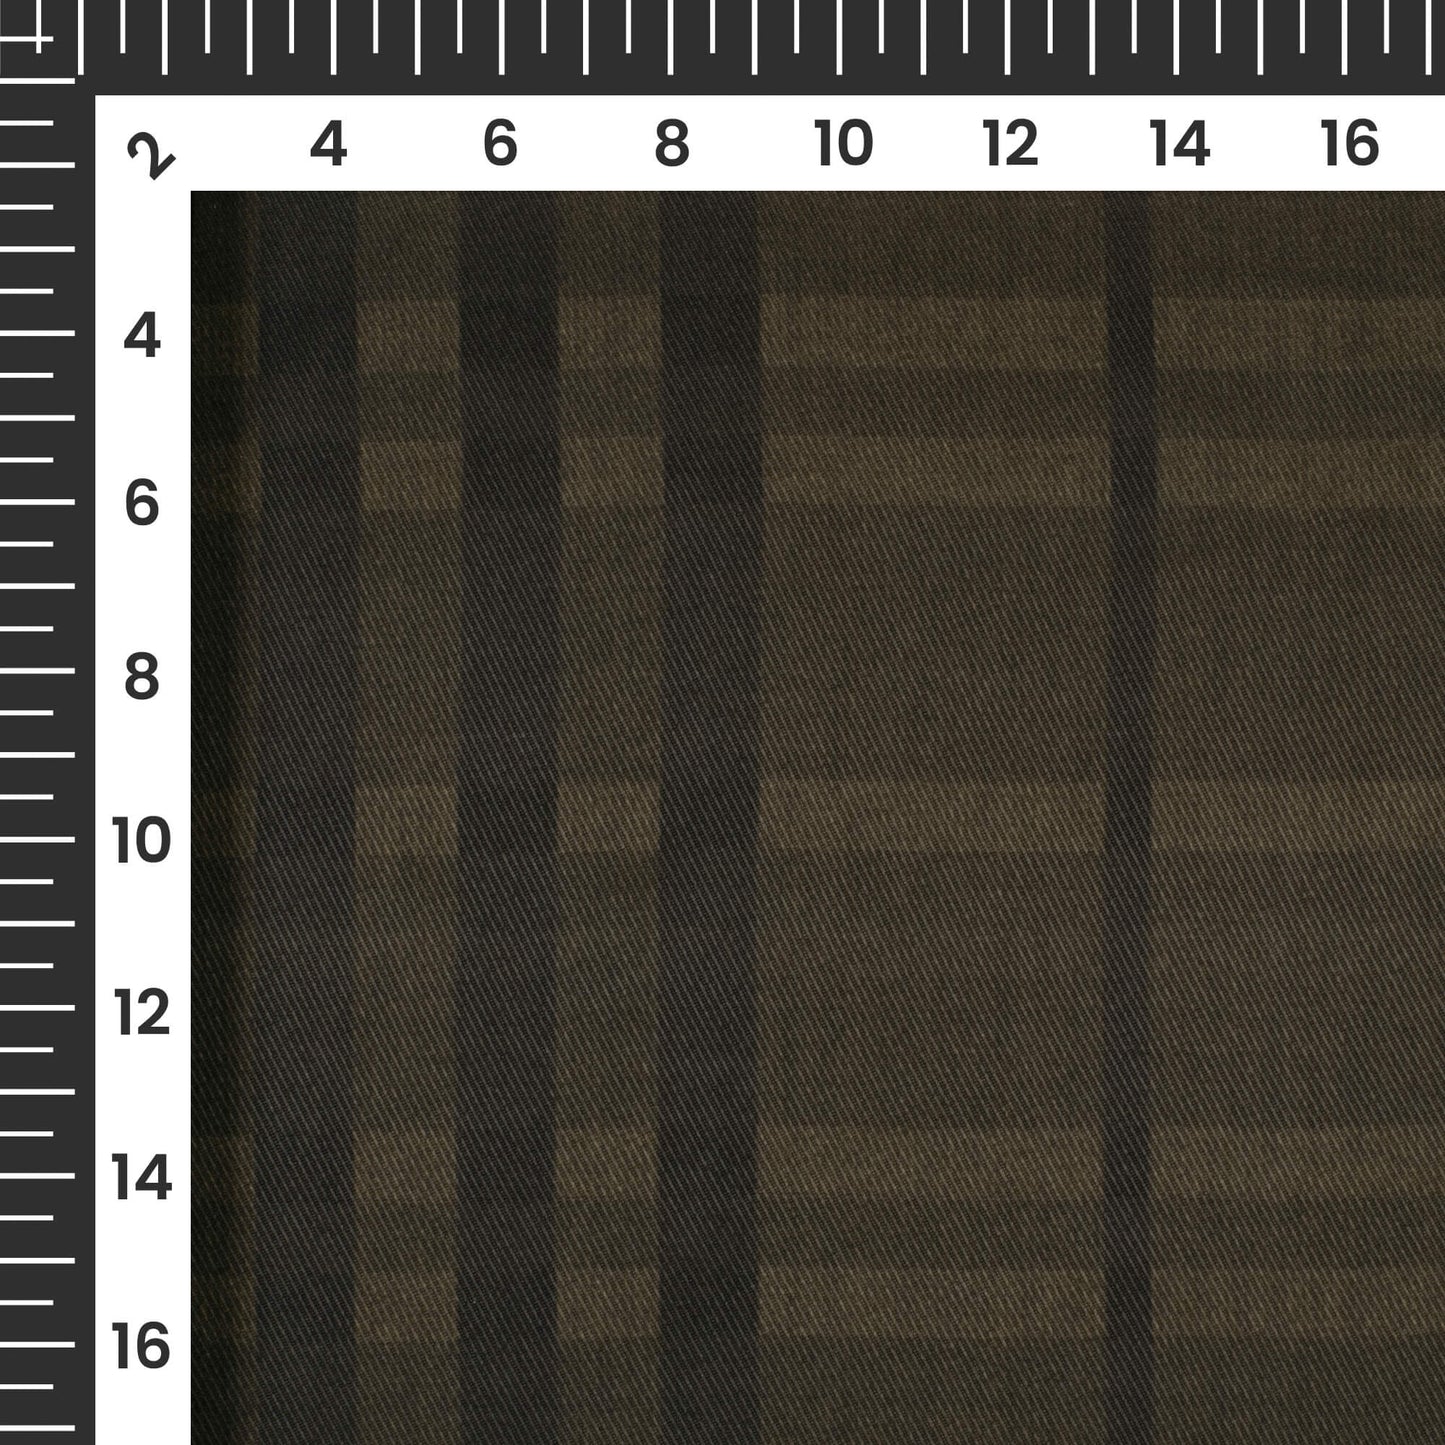 Dark Brown And Black Checks Pattern Digital Print Twill Fabric (Width 56 Inches)